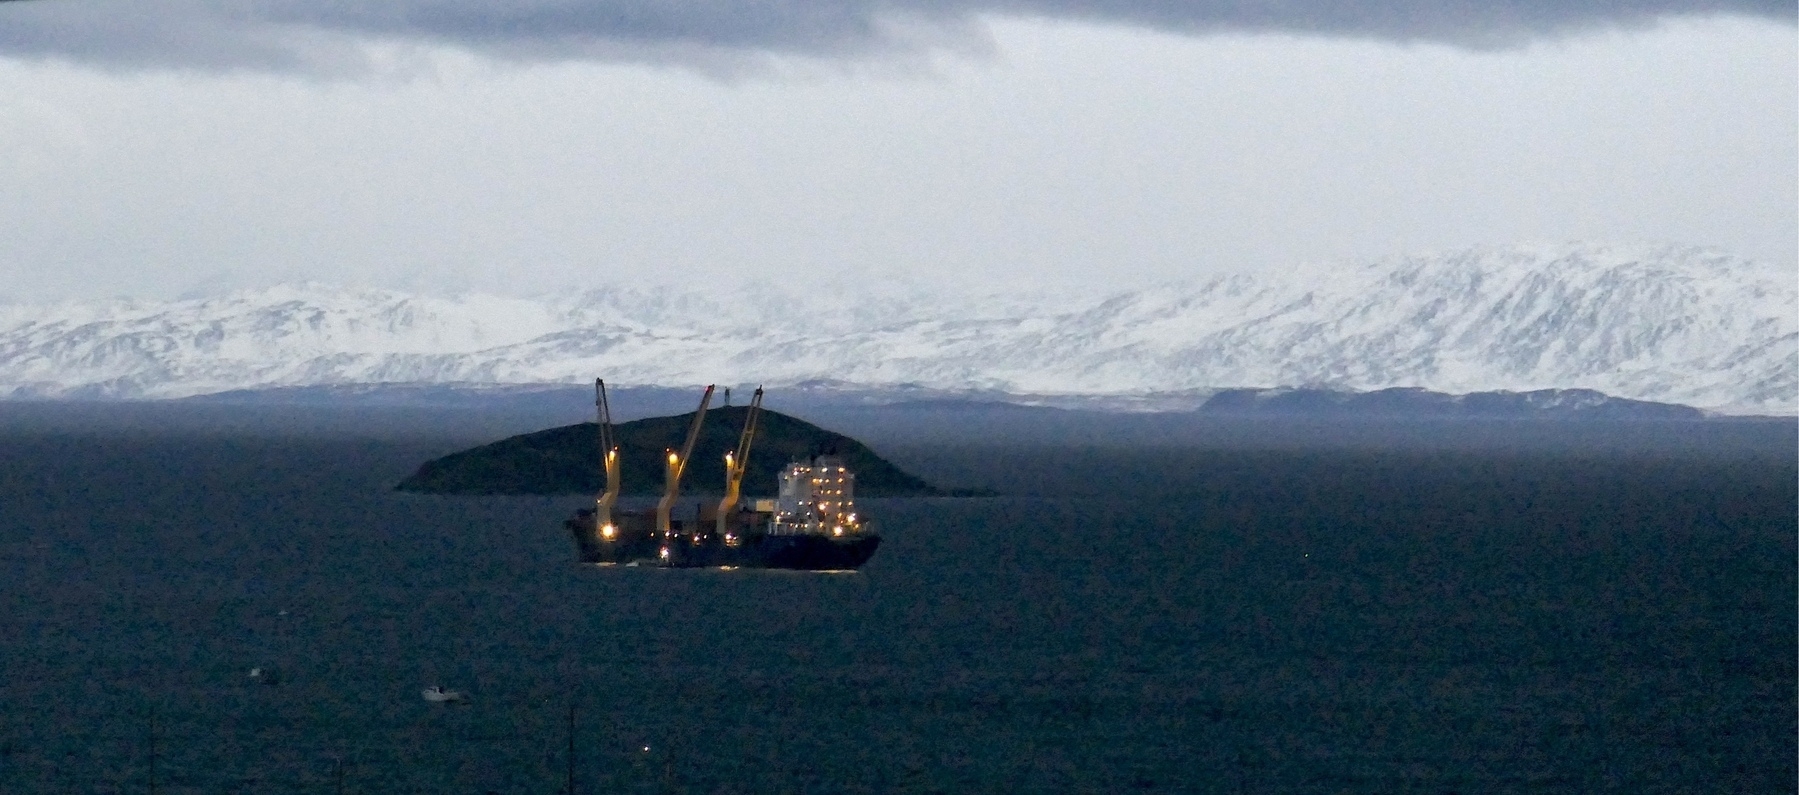 Sealift ship in Frobisher Bay